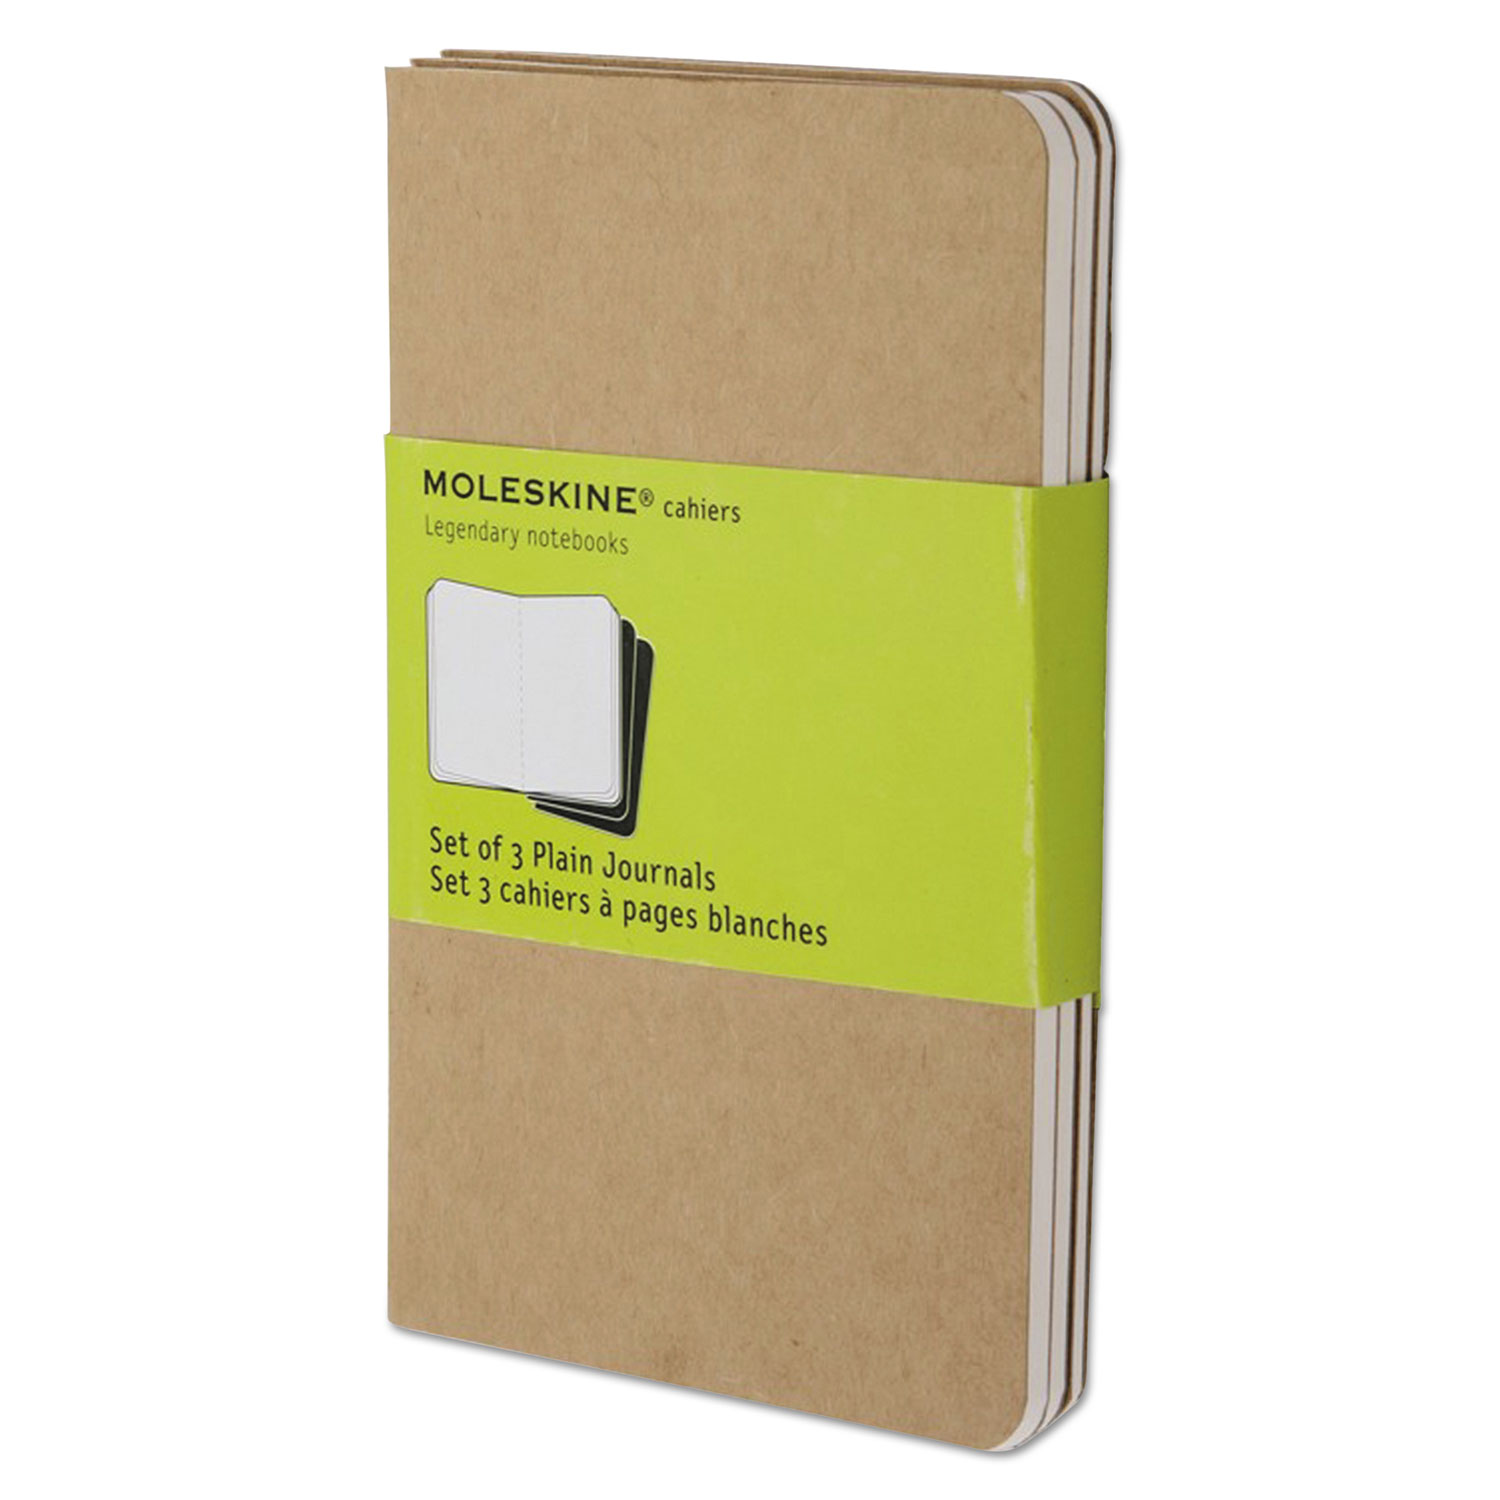  Moleskine QP413 Cahier Journal, Unruled, Kraft Brown Cover, 5.5 x 3.5, 64 Sheets, 3/Pack (HBGQP413) 